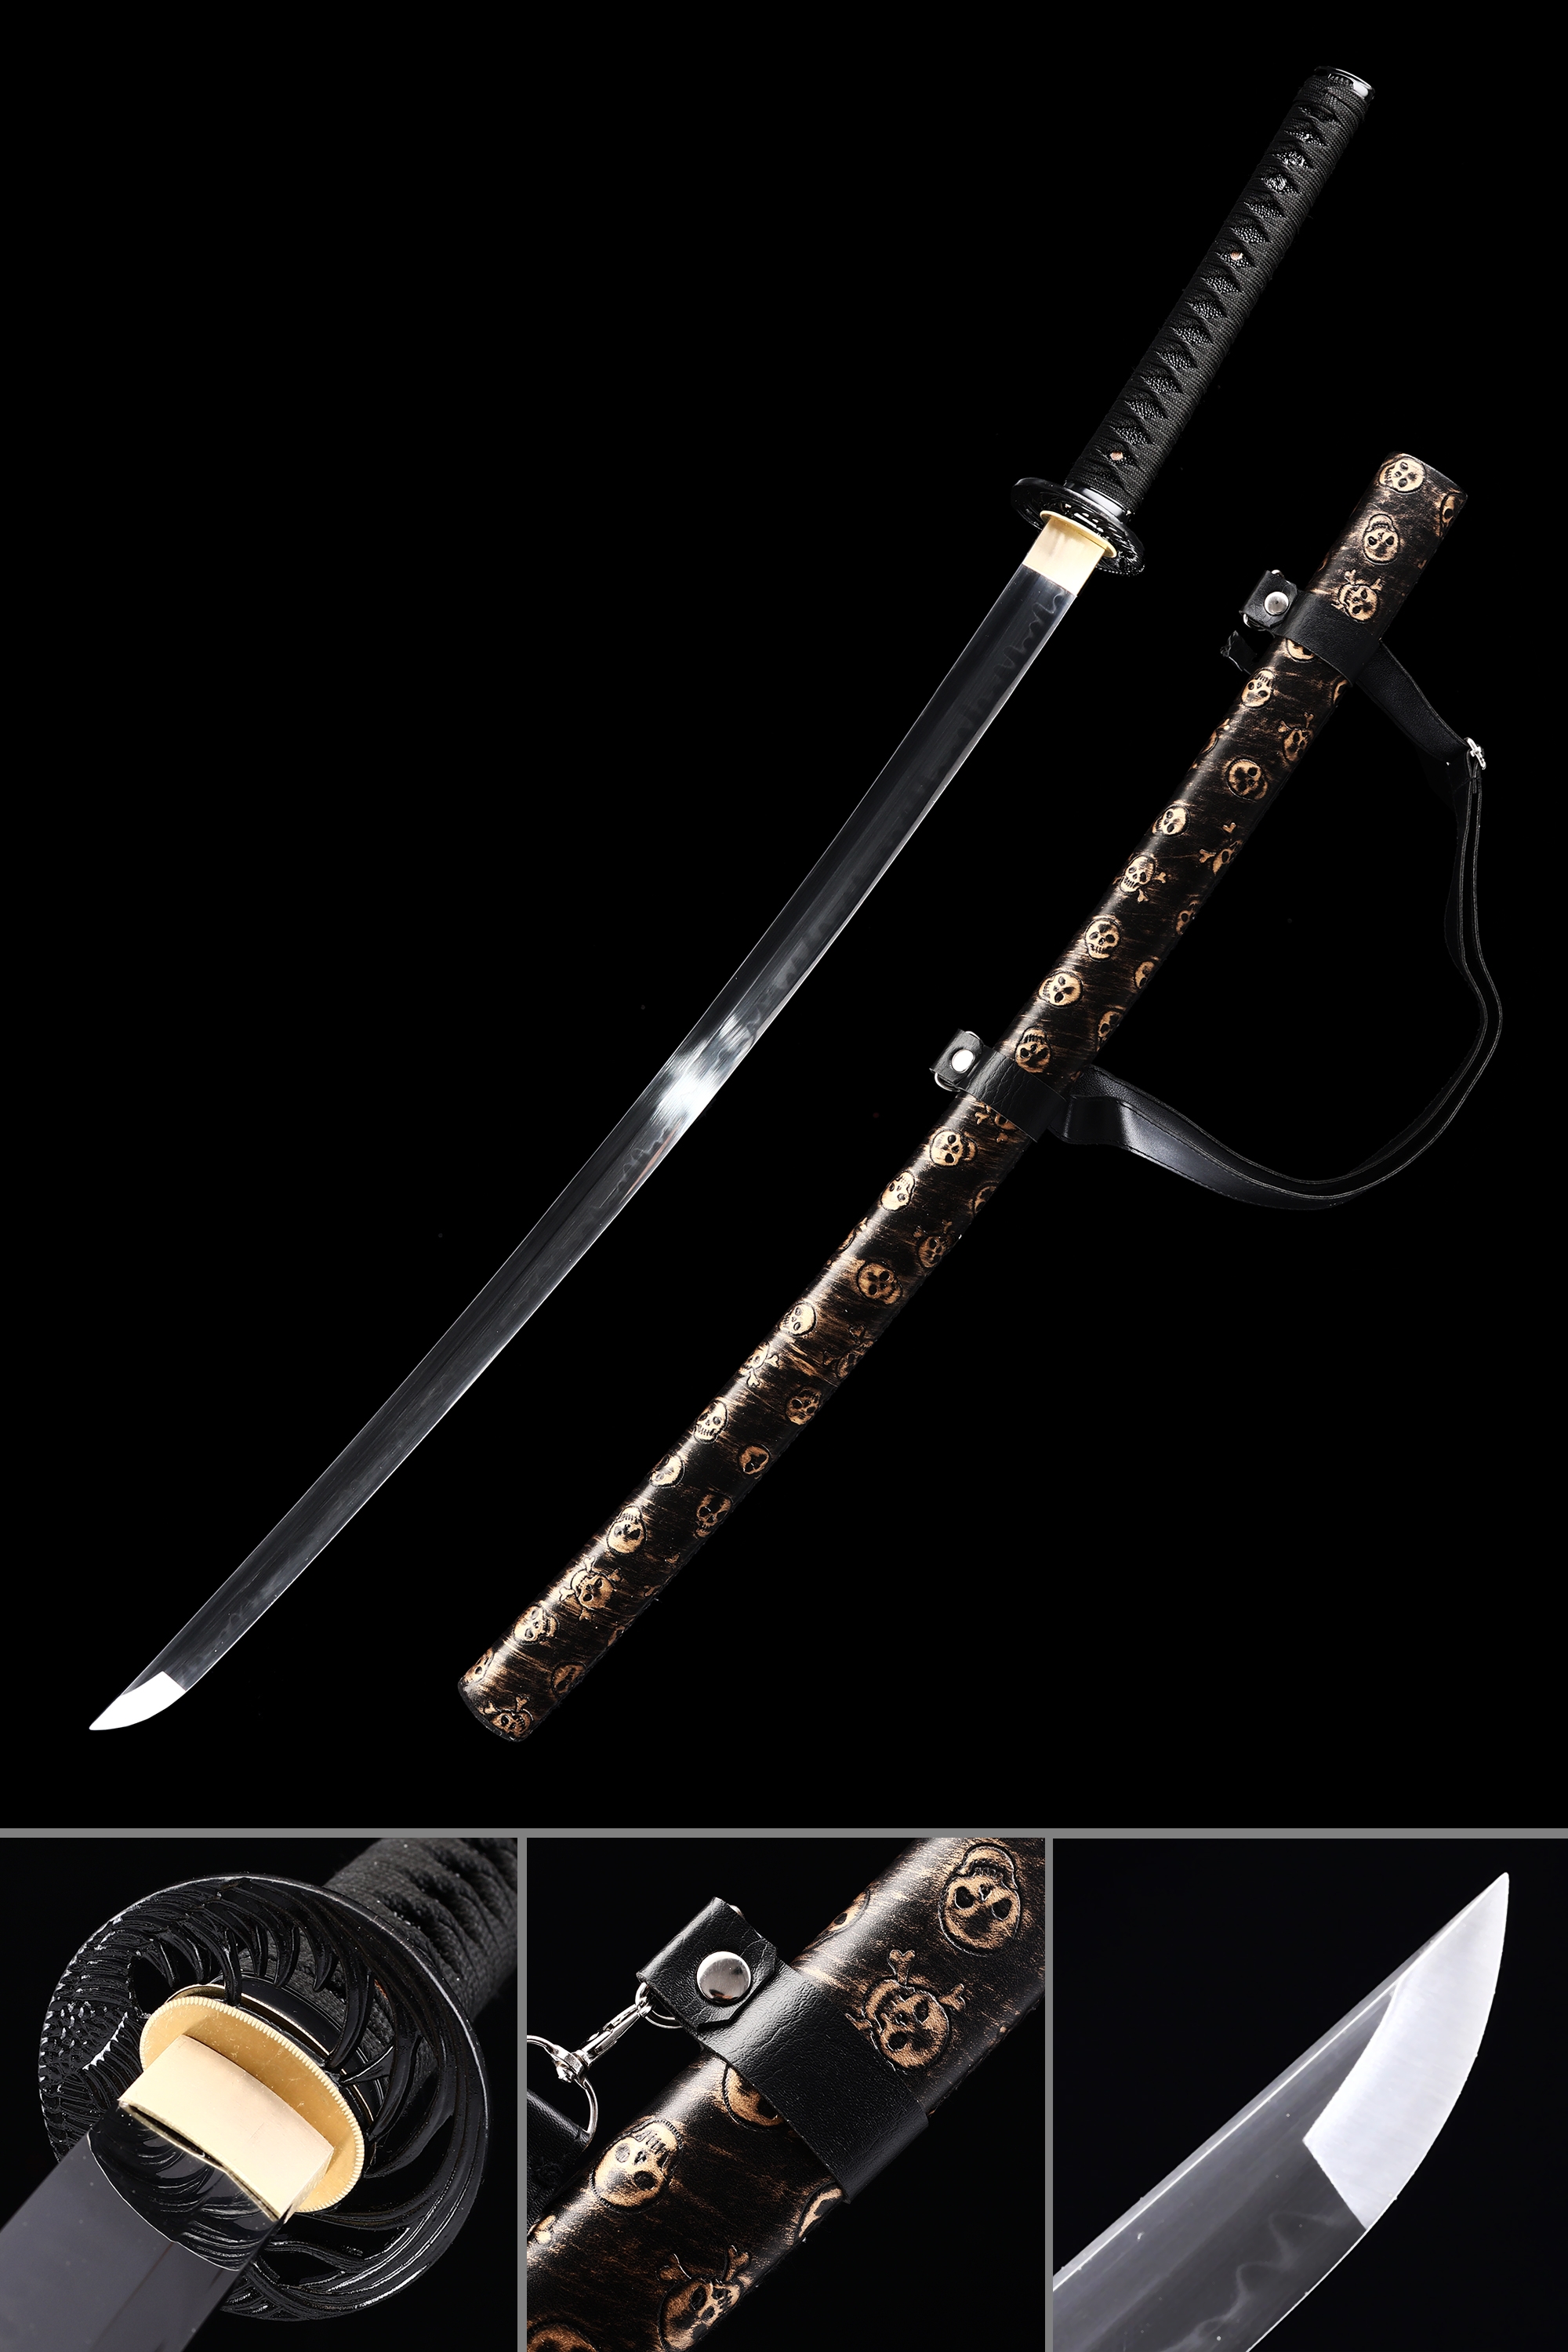 Katana Sword With Strap for Sale - TrueKatana